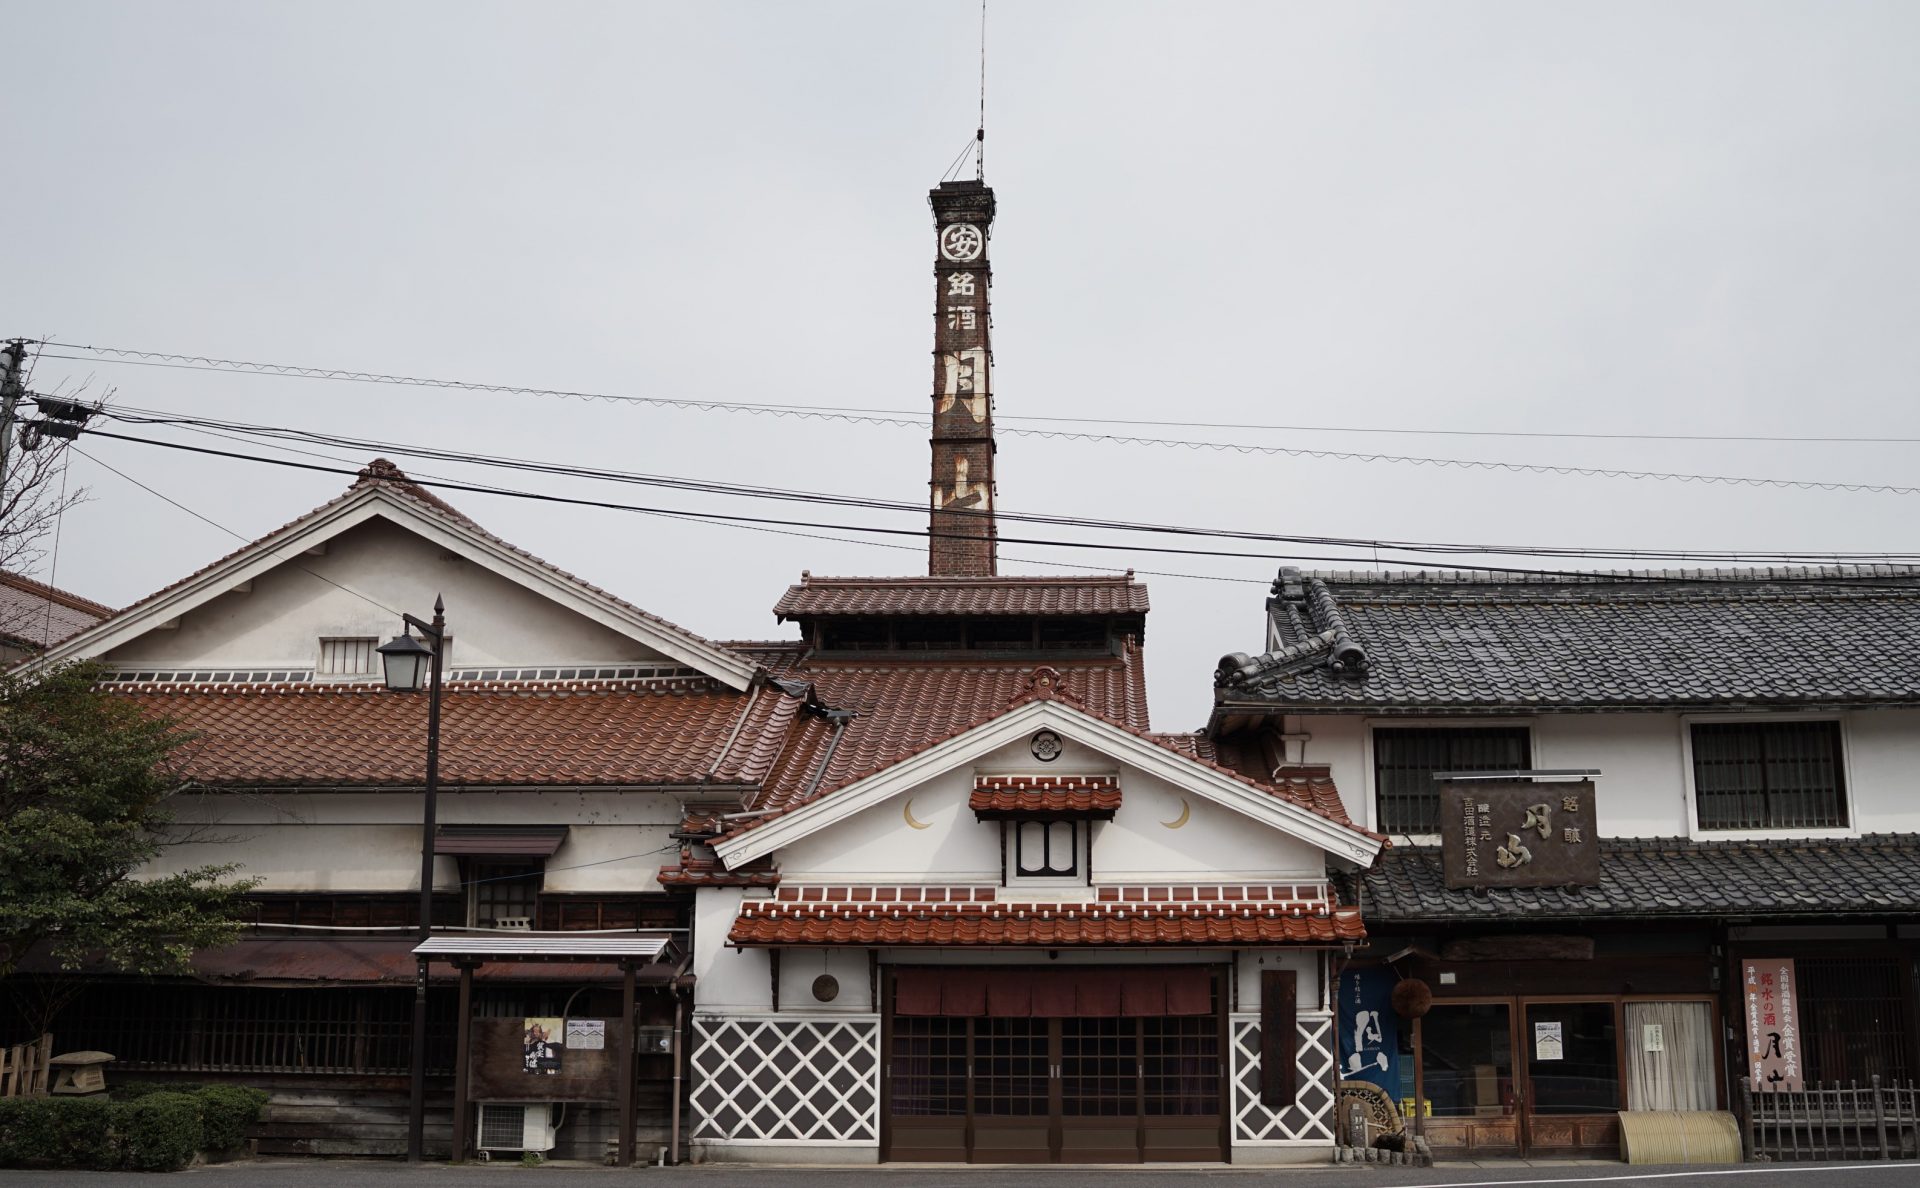 La maison de saké Yoshida shuzo Kura 吉田酒造